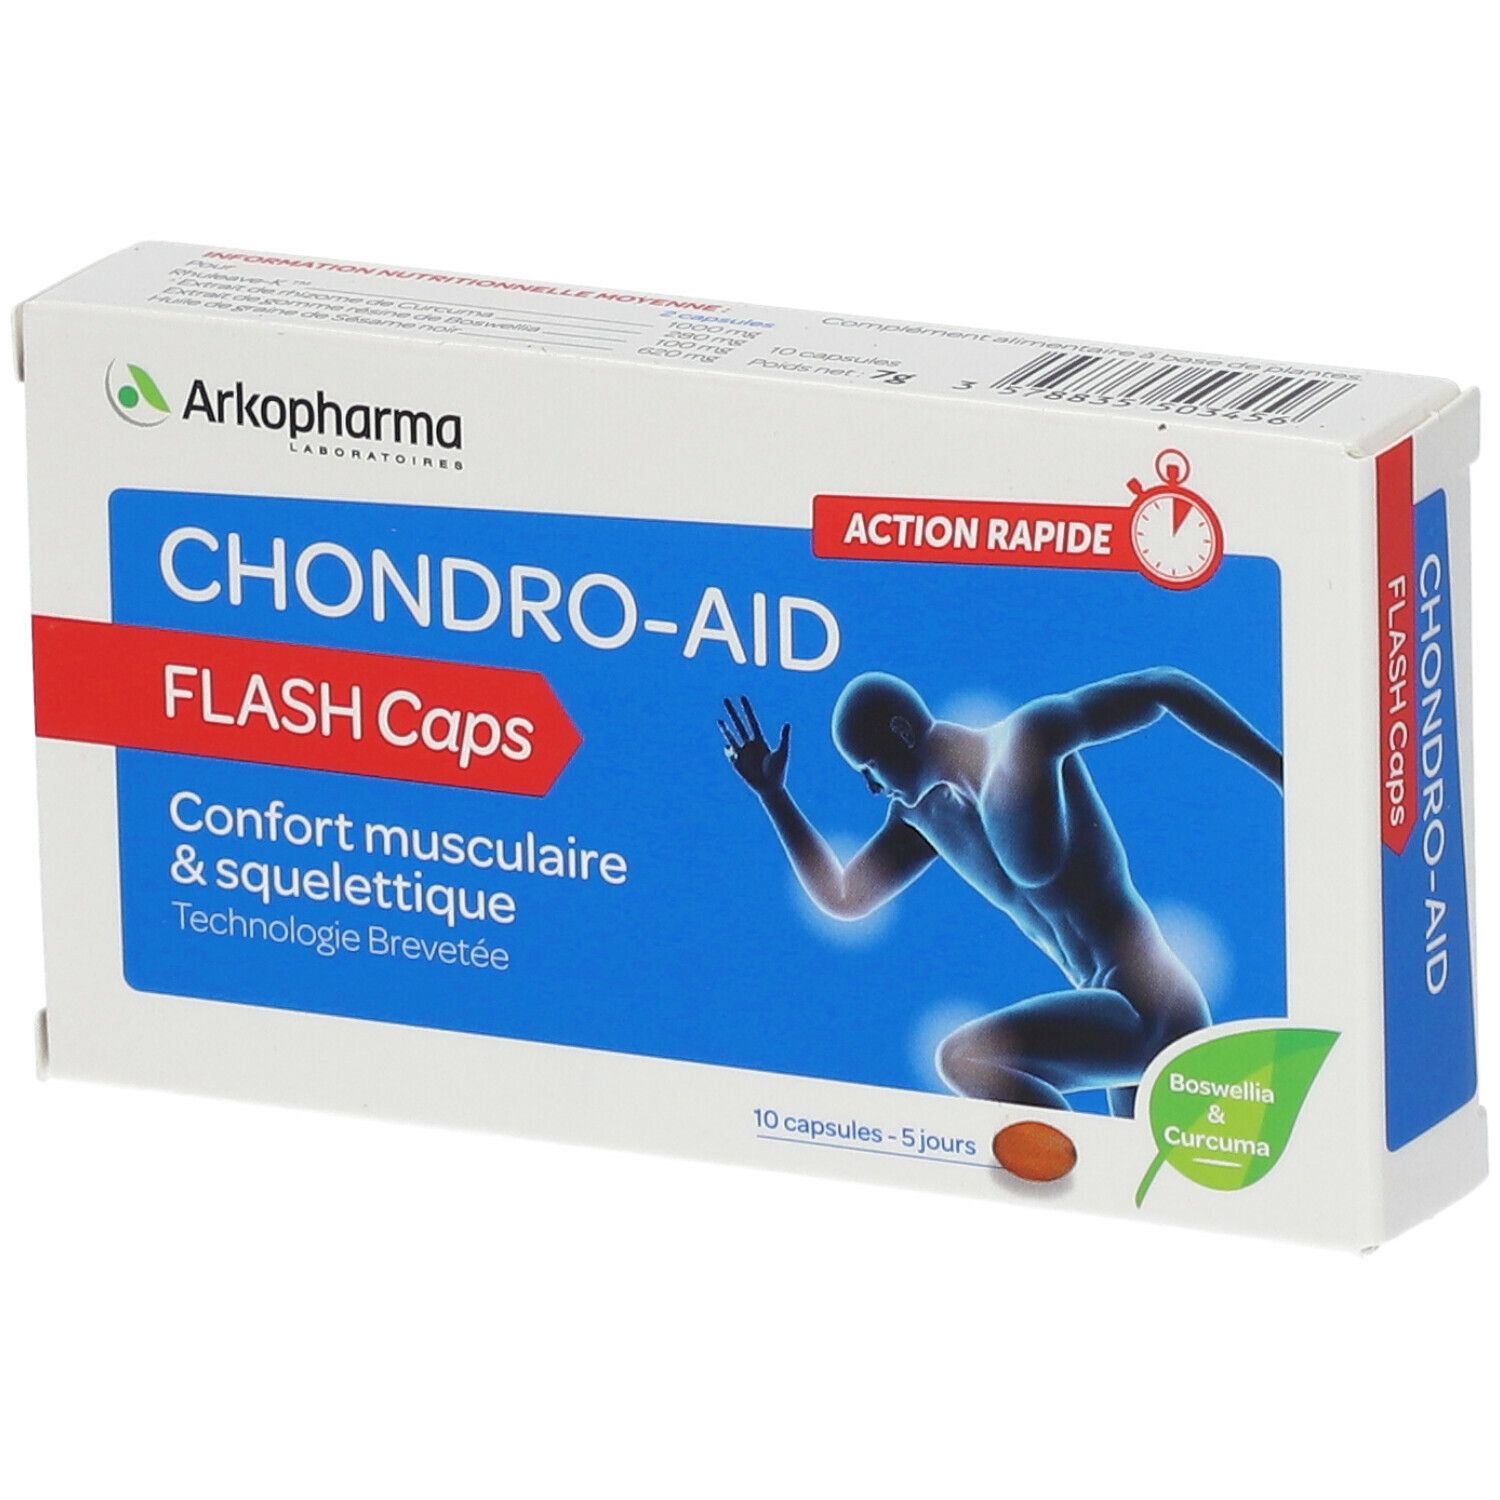 Arkopharma Chondro-Aid® Flash Caps